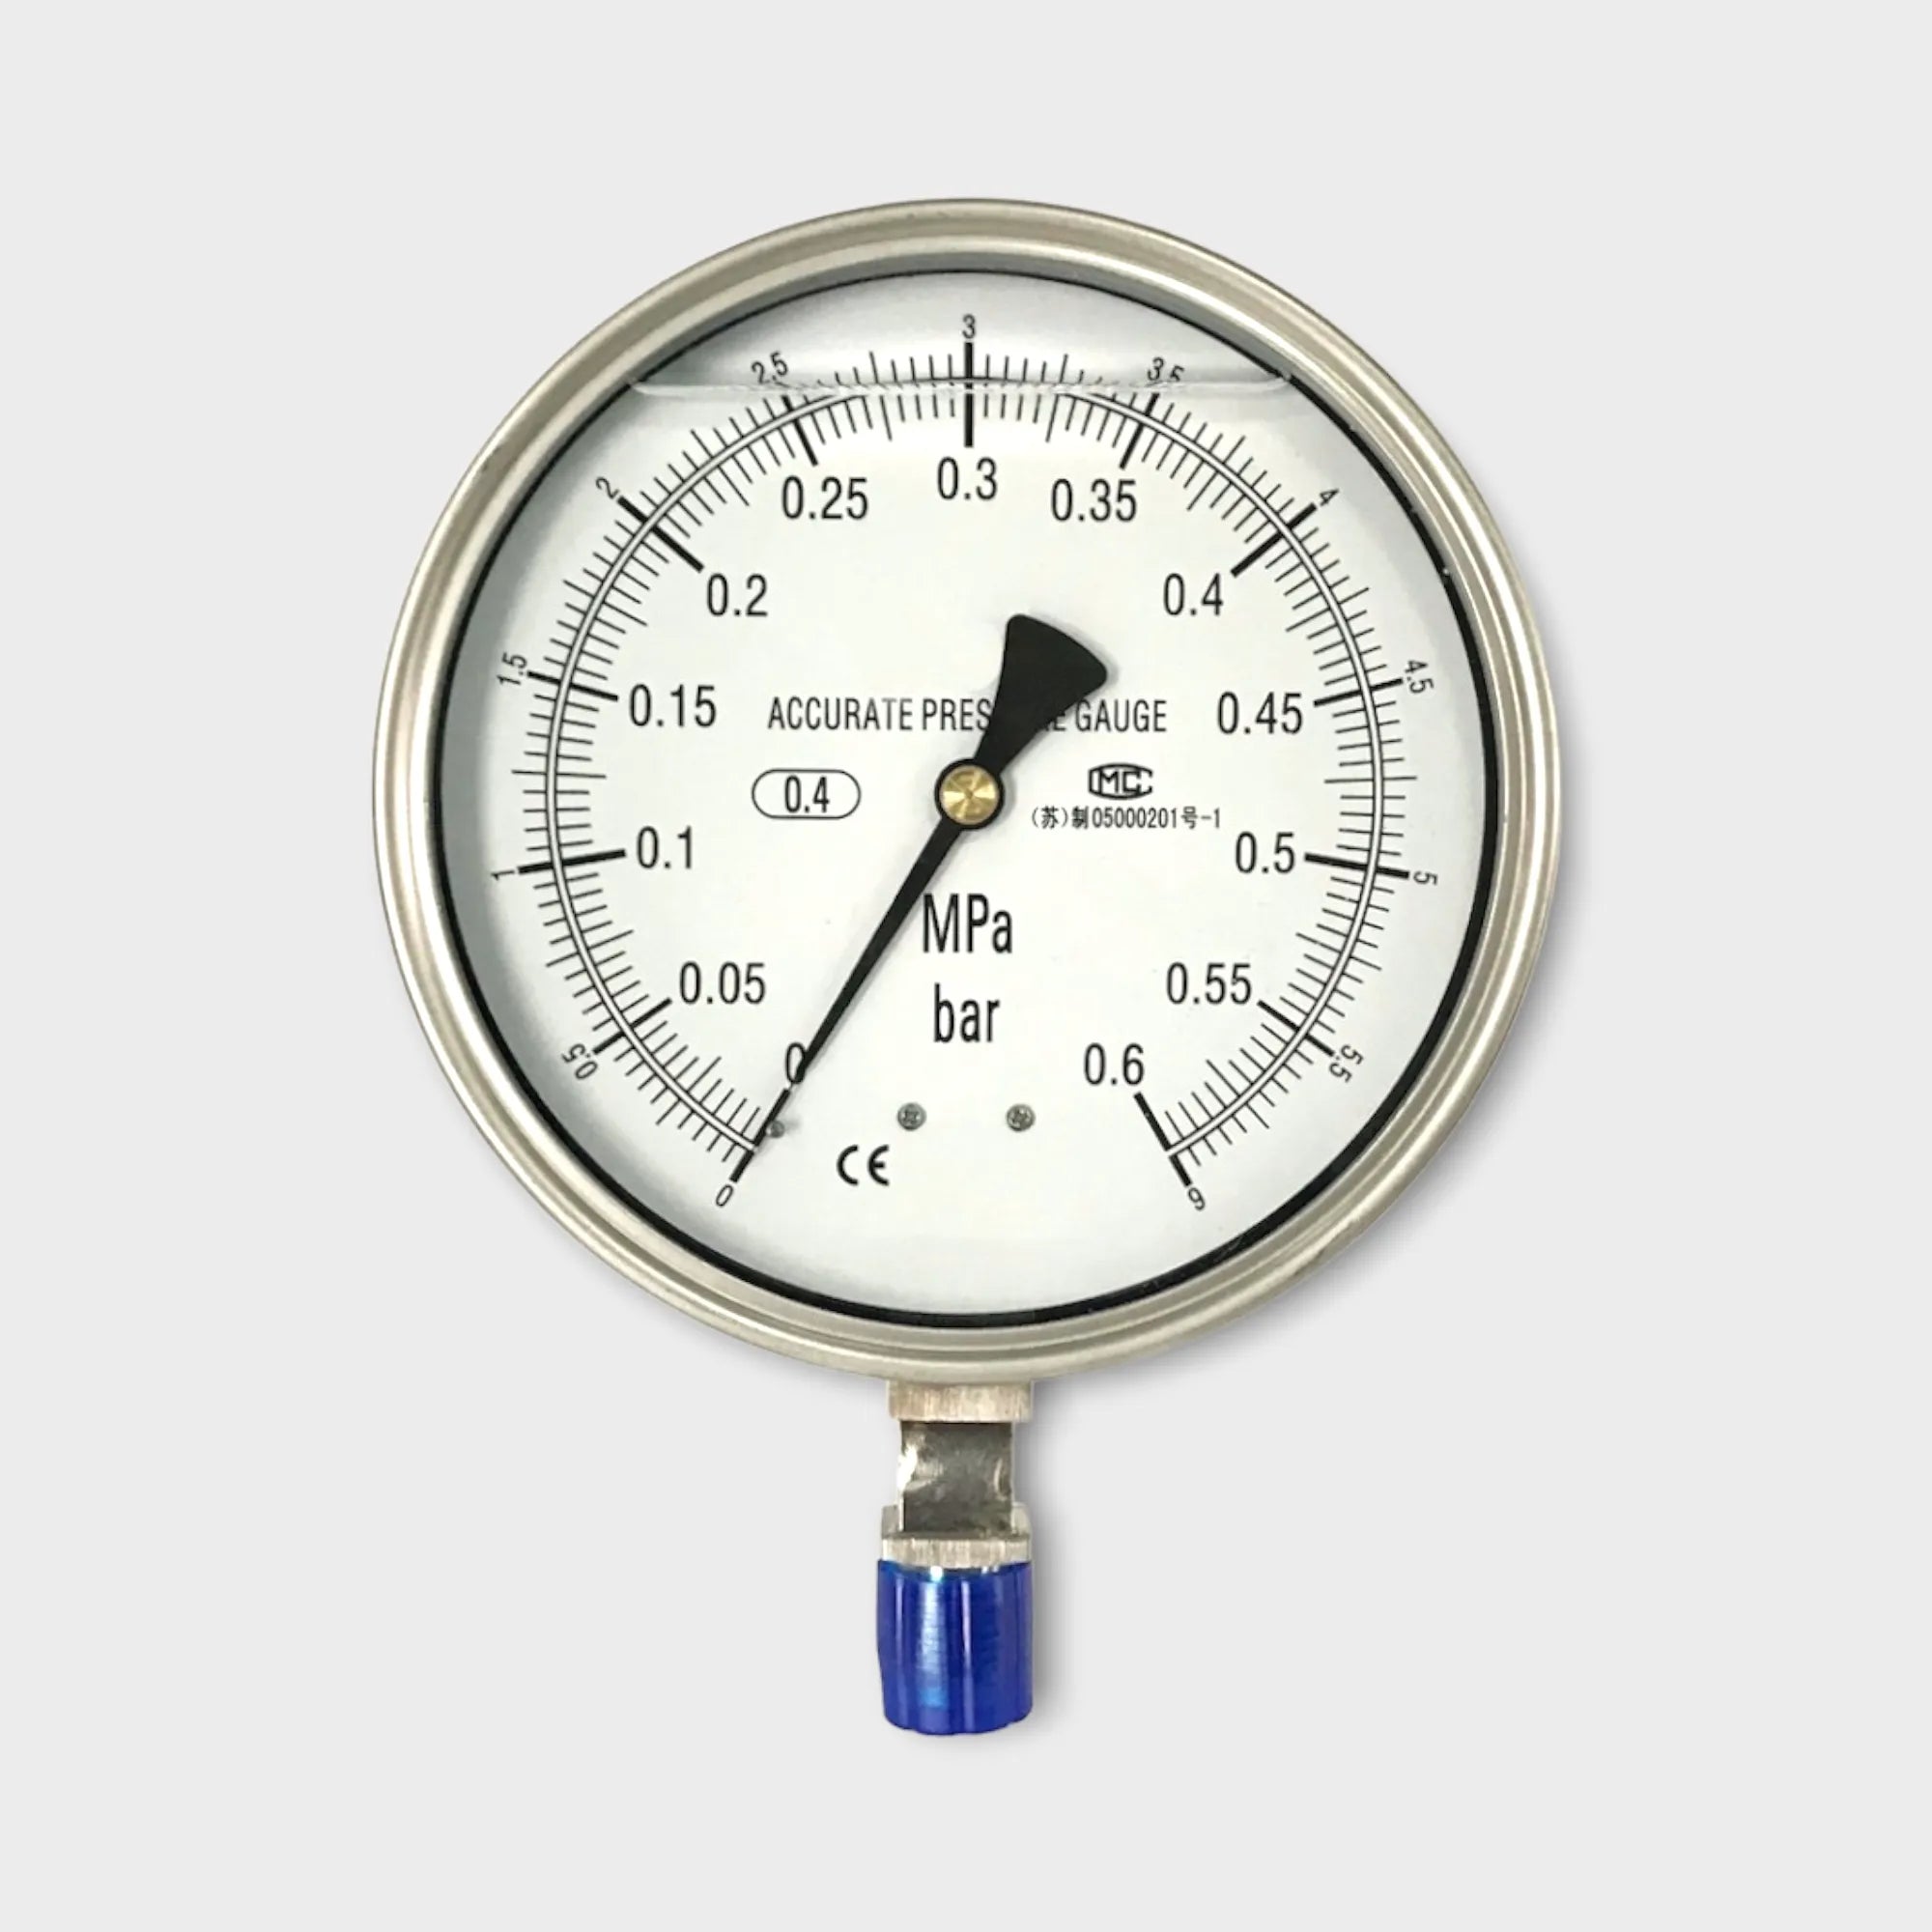 Precision Pressure Gauge for Test Manometer Use - WESEN